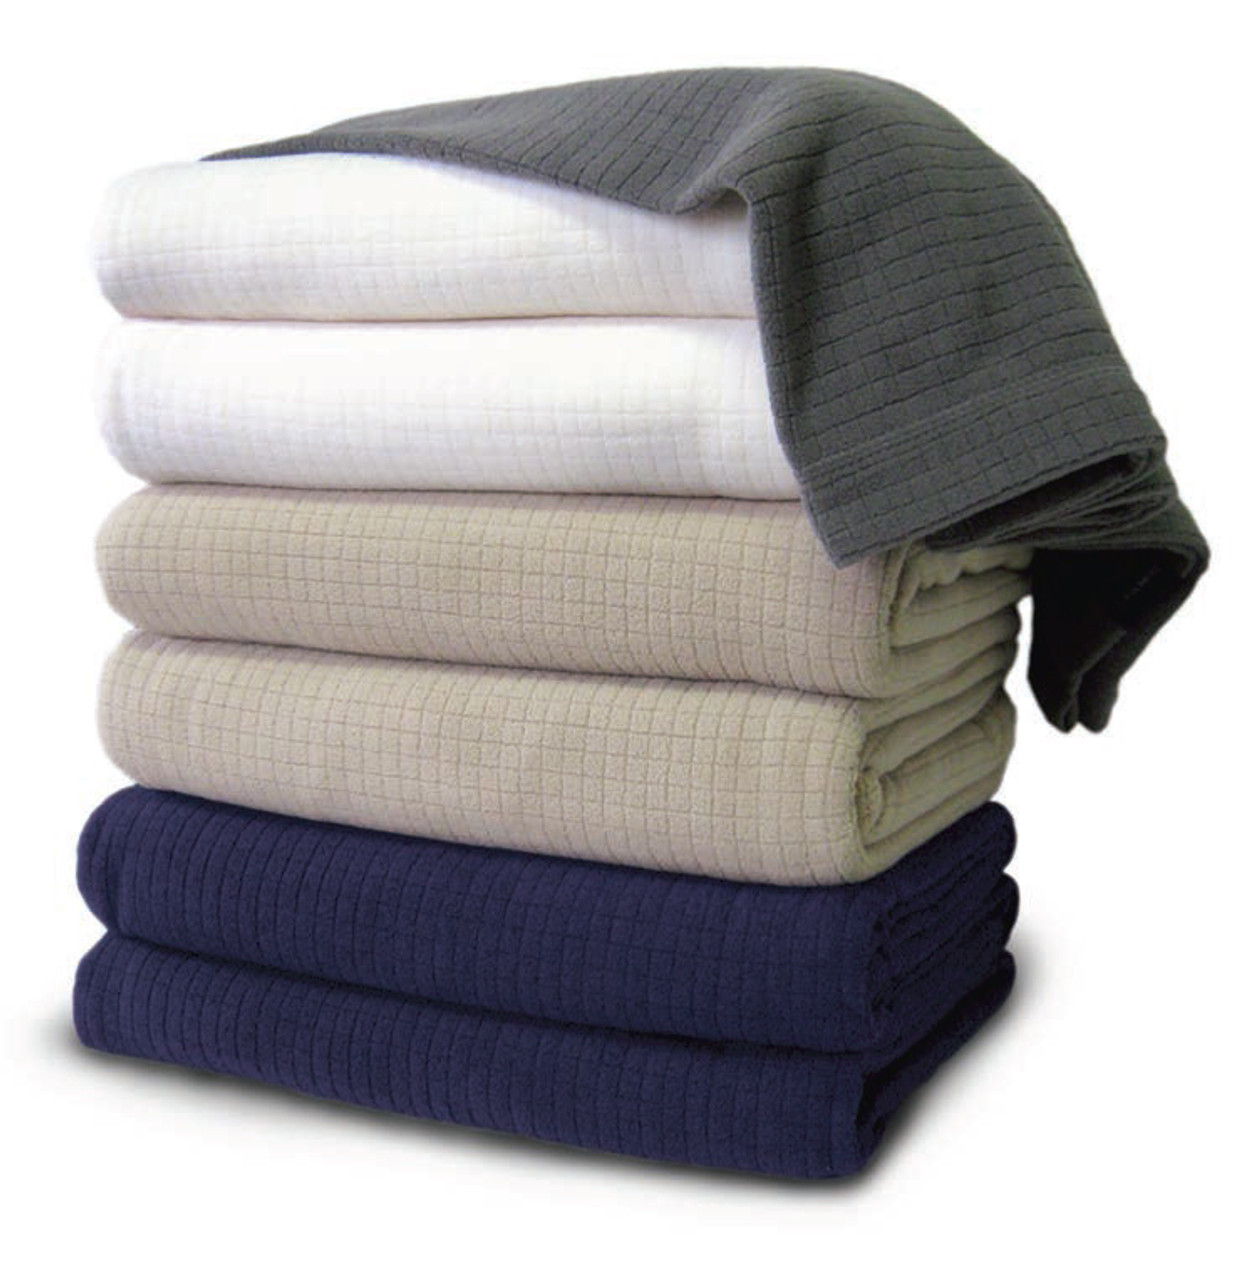 Oxford Microplush Fleece Blankets, Size: King, Gray